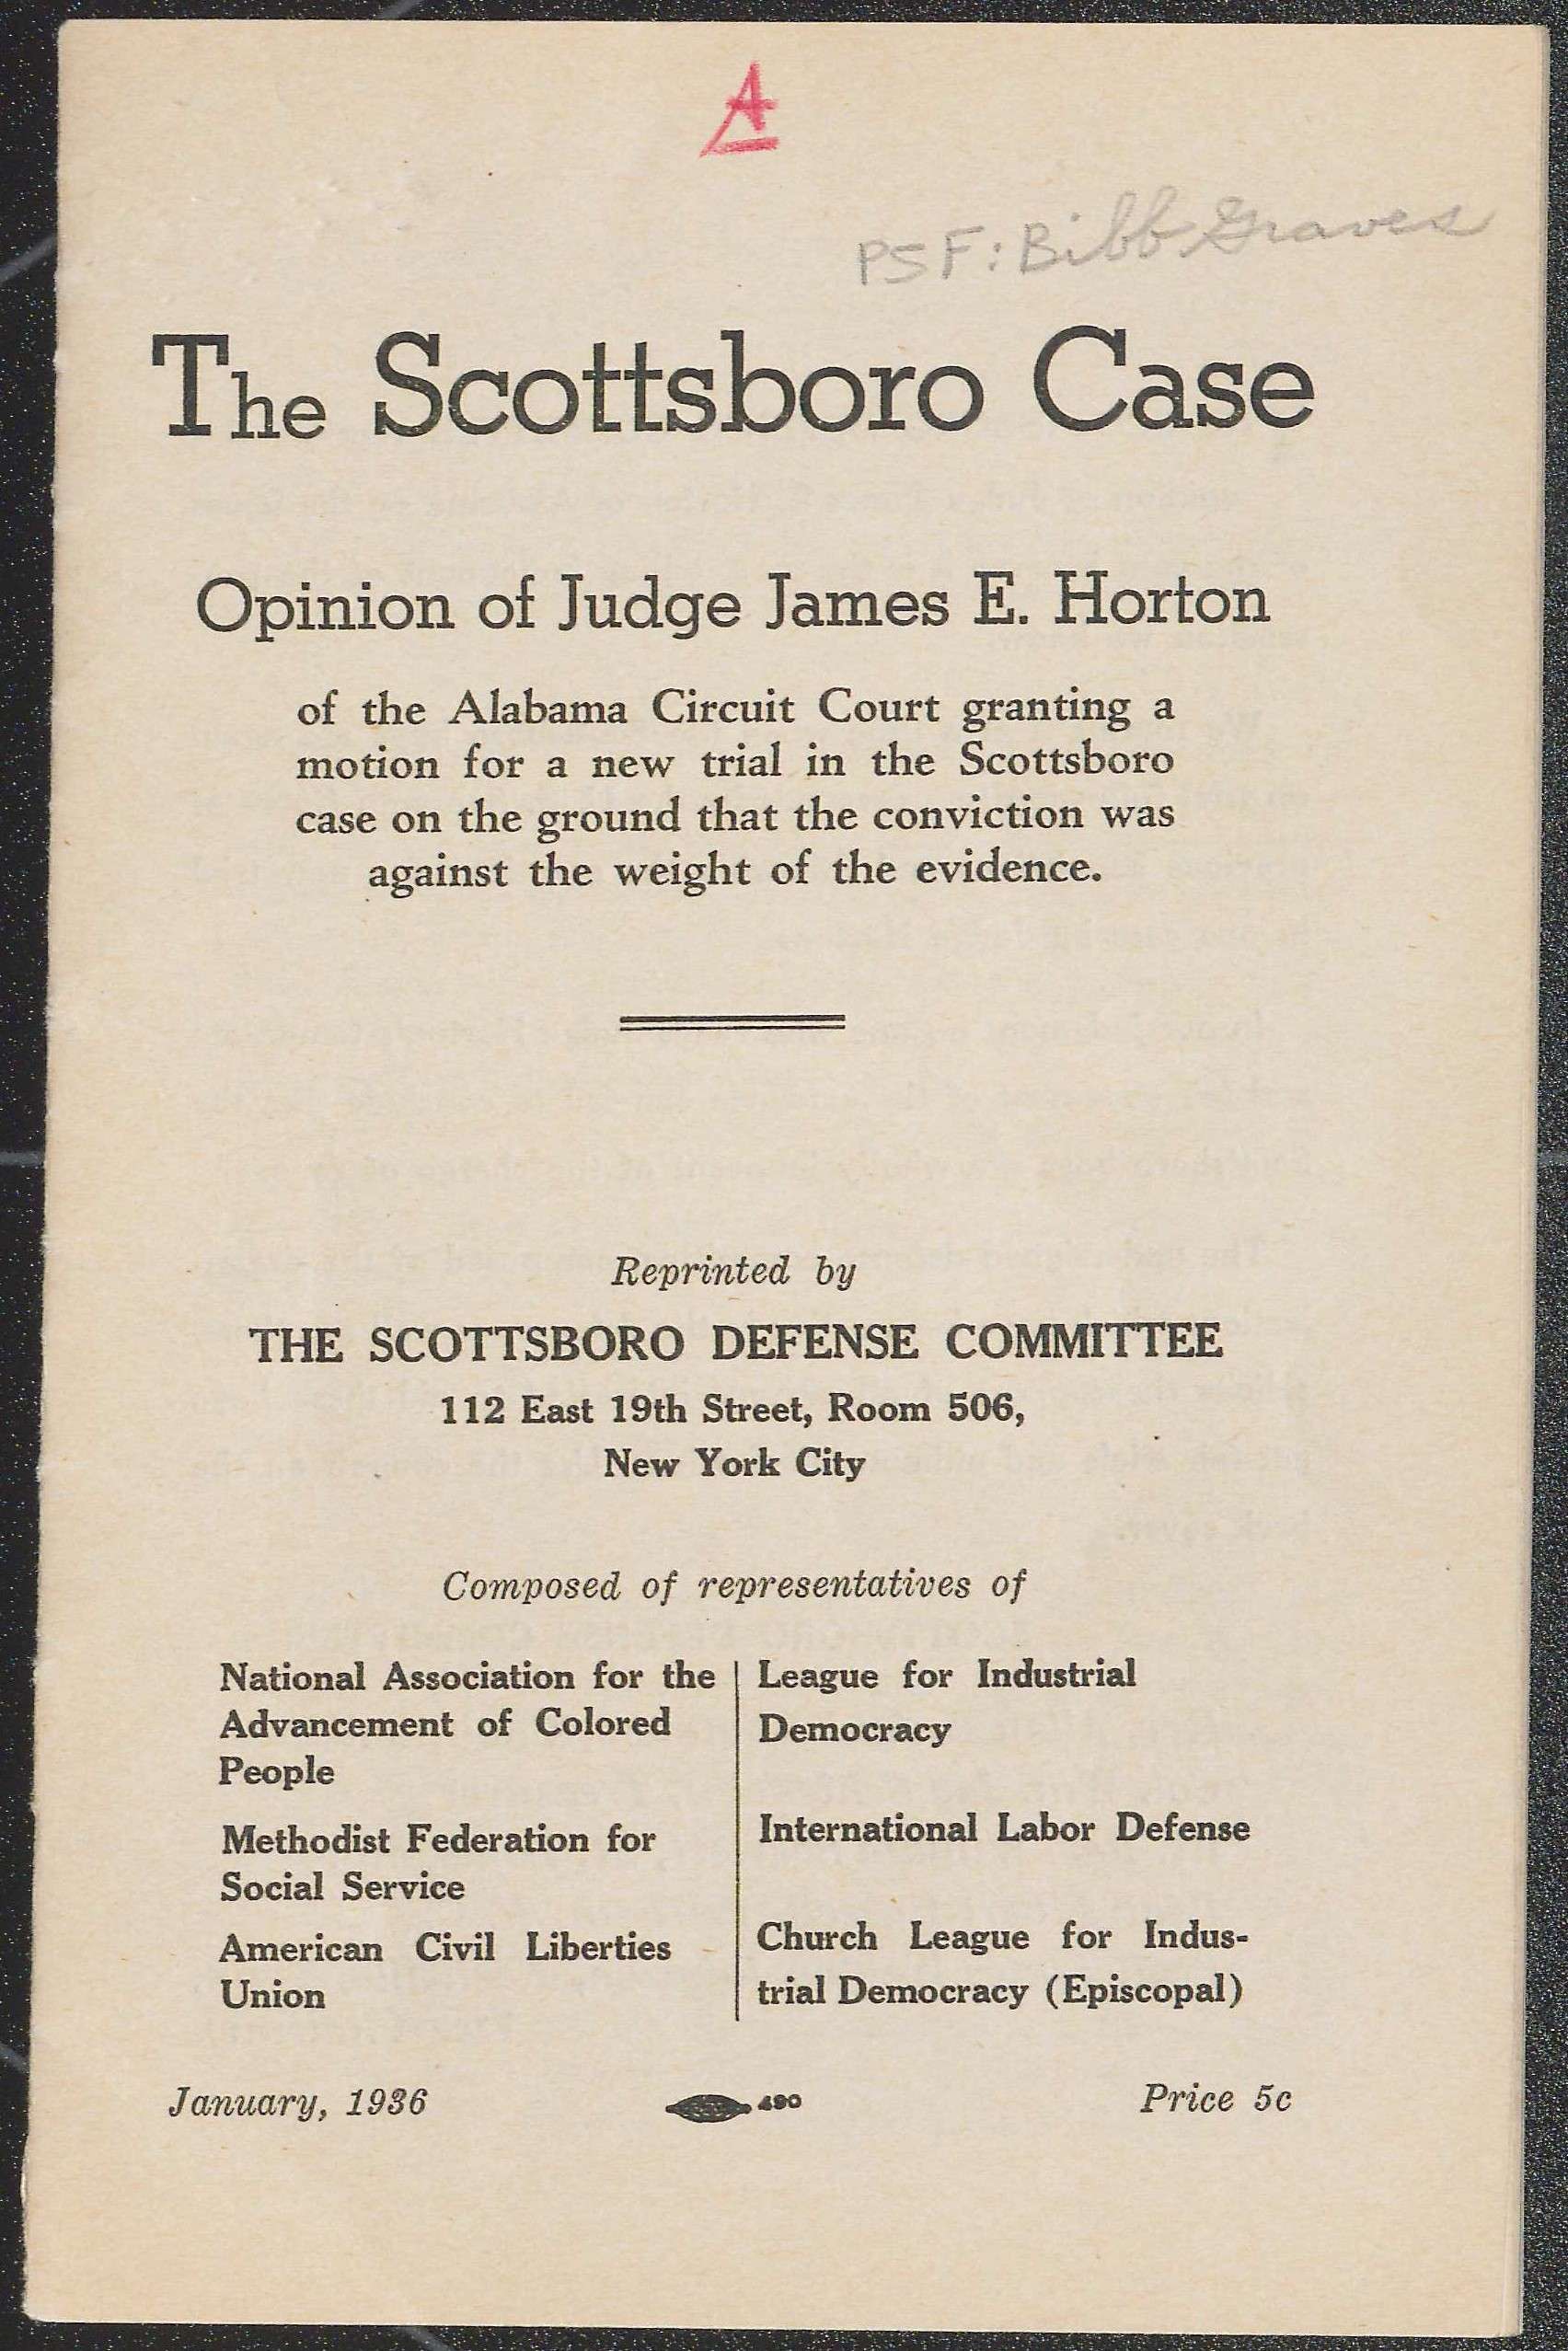 The Scottsboro Case: Opinion of Judge James E. Horton, as reprinted by the Scottsboro Defense Committee